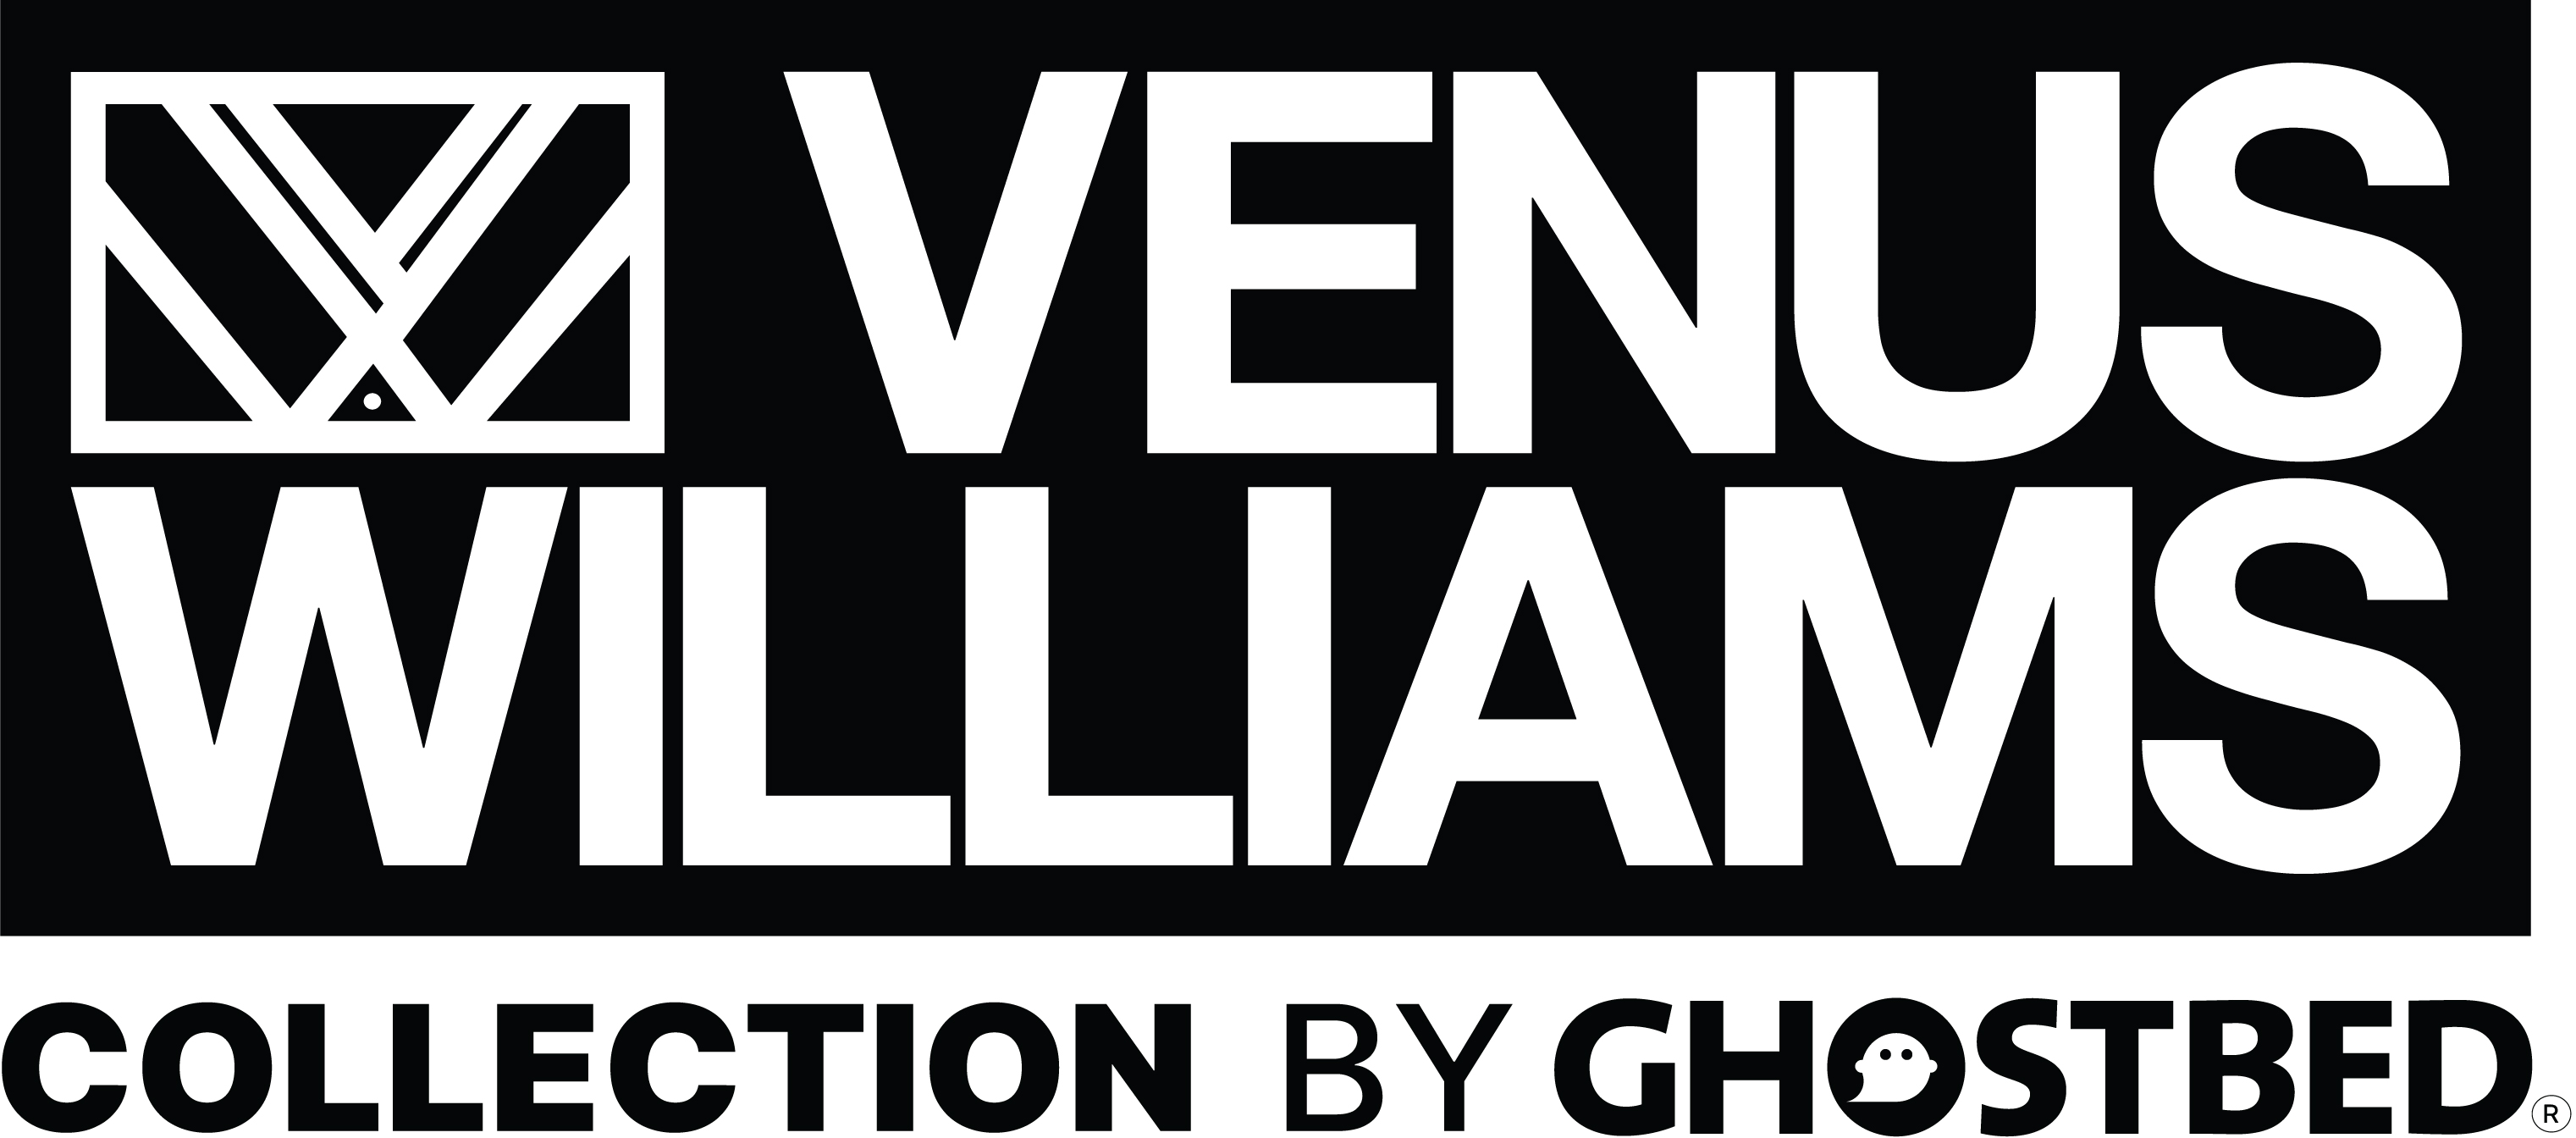 Venus Williams by Ghostbed logo